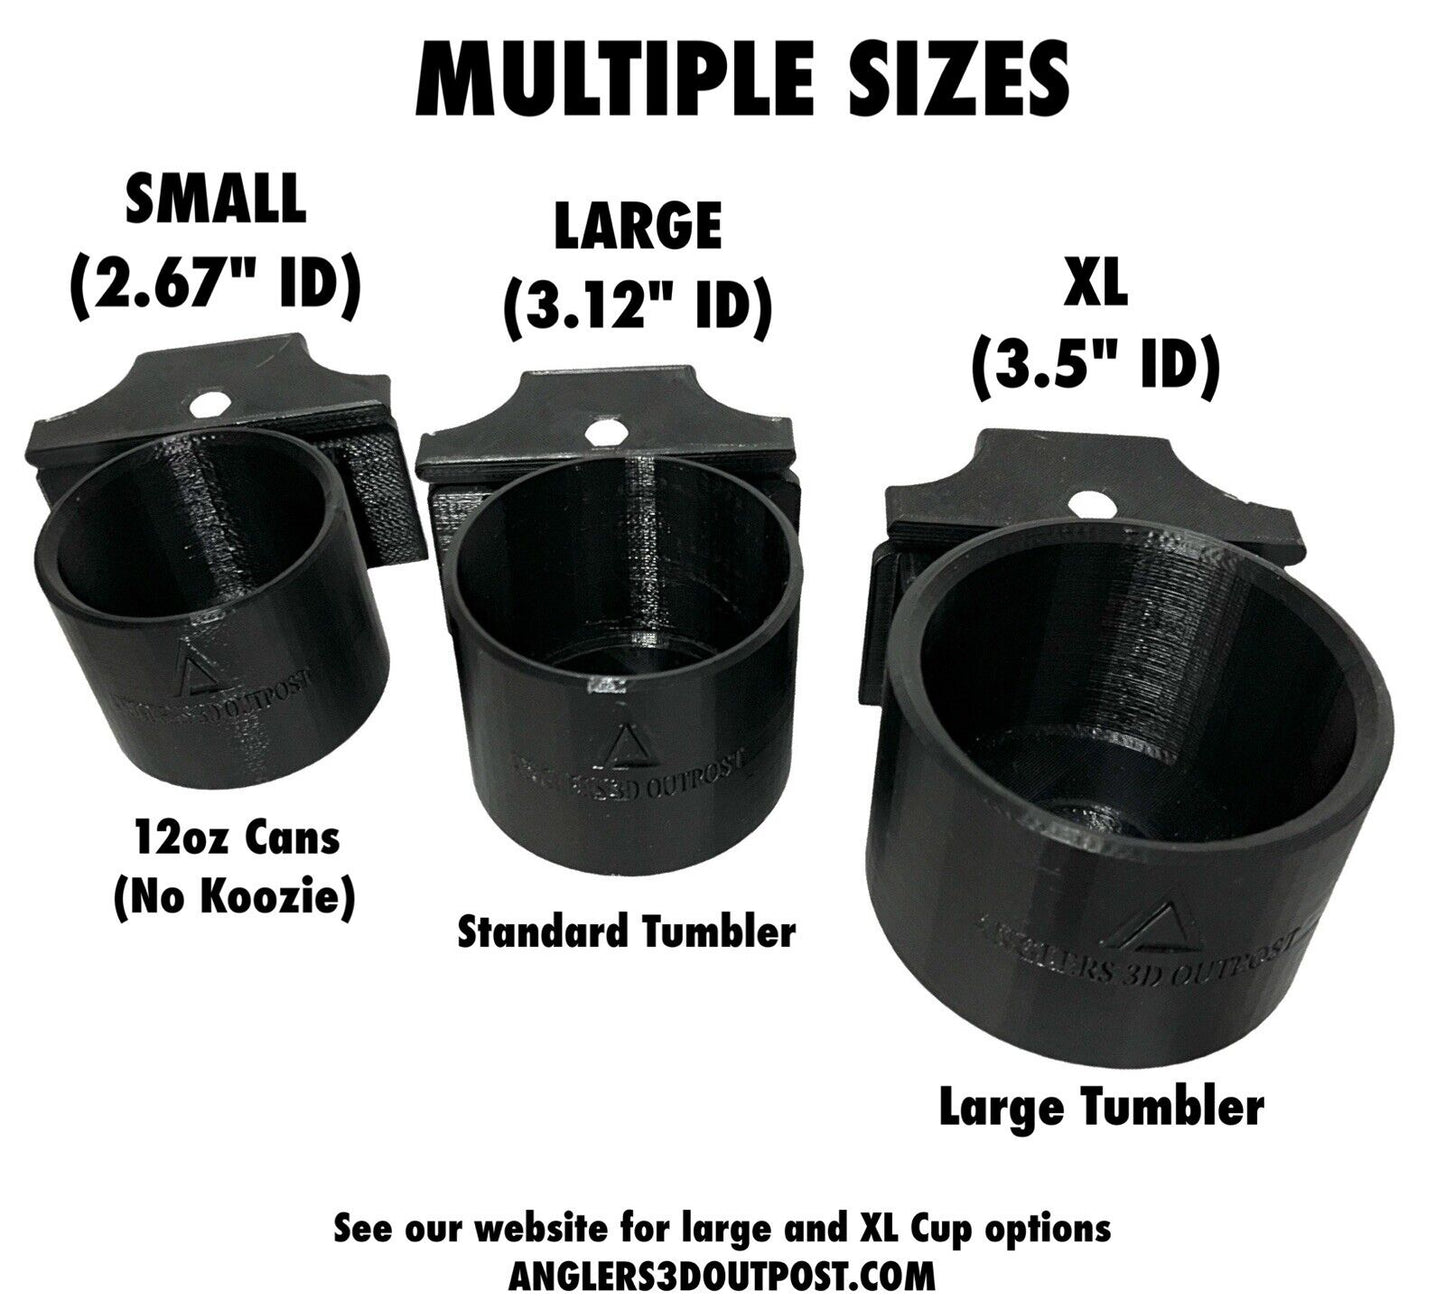 Cup Holder For AlumaCraft AlumaTrac Rail (Select Size)